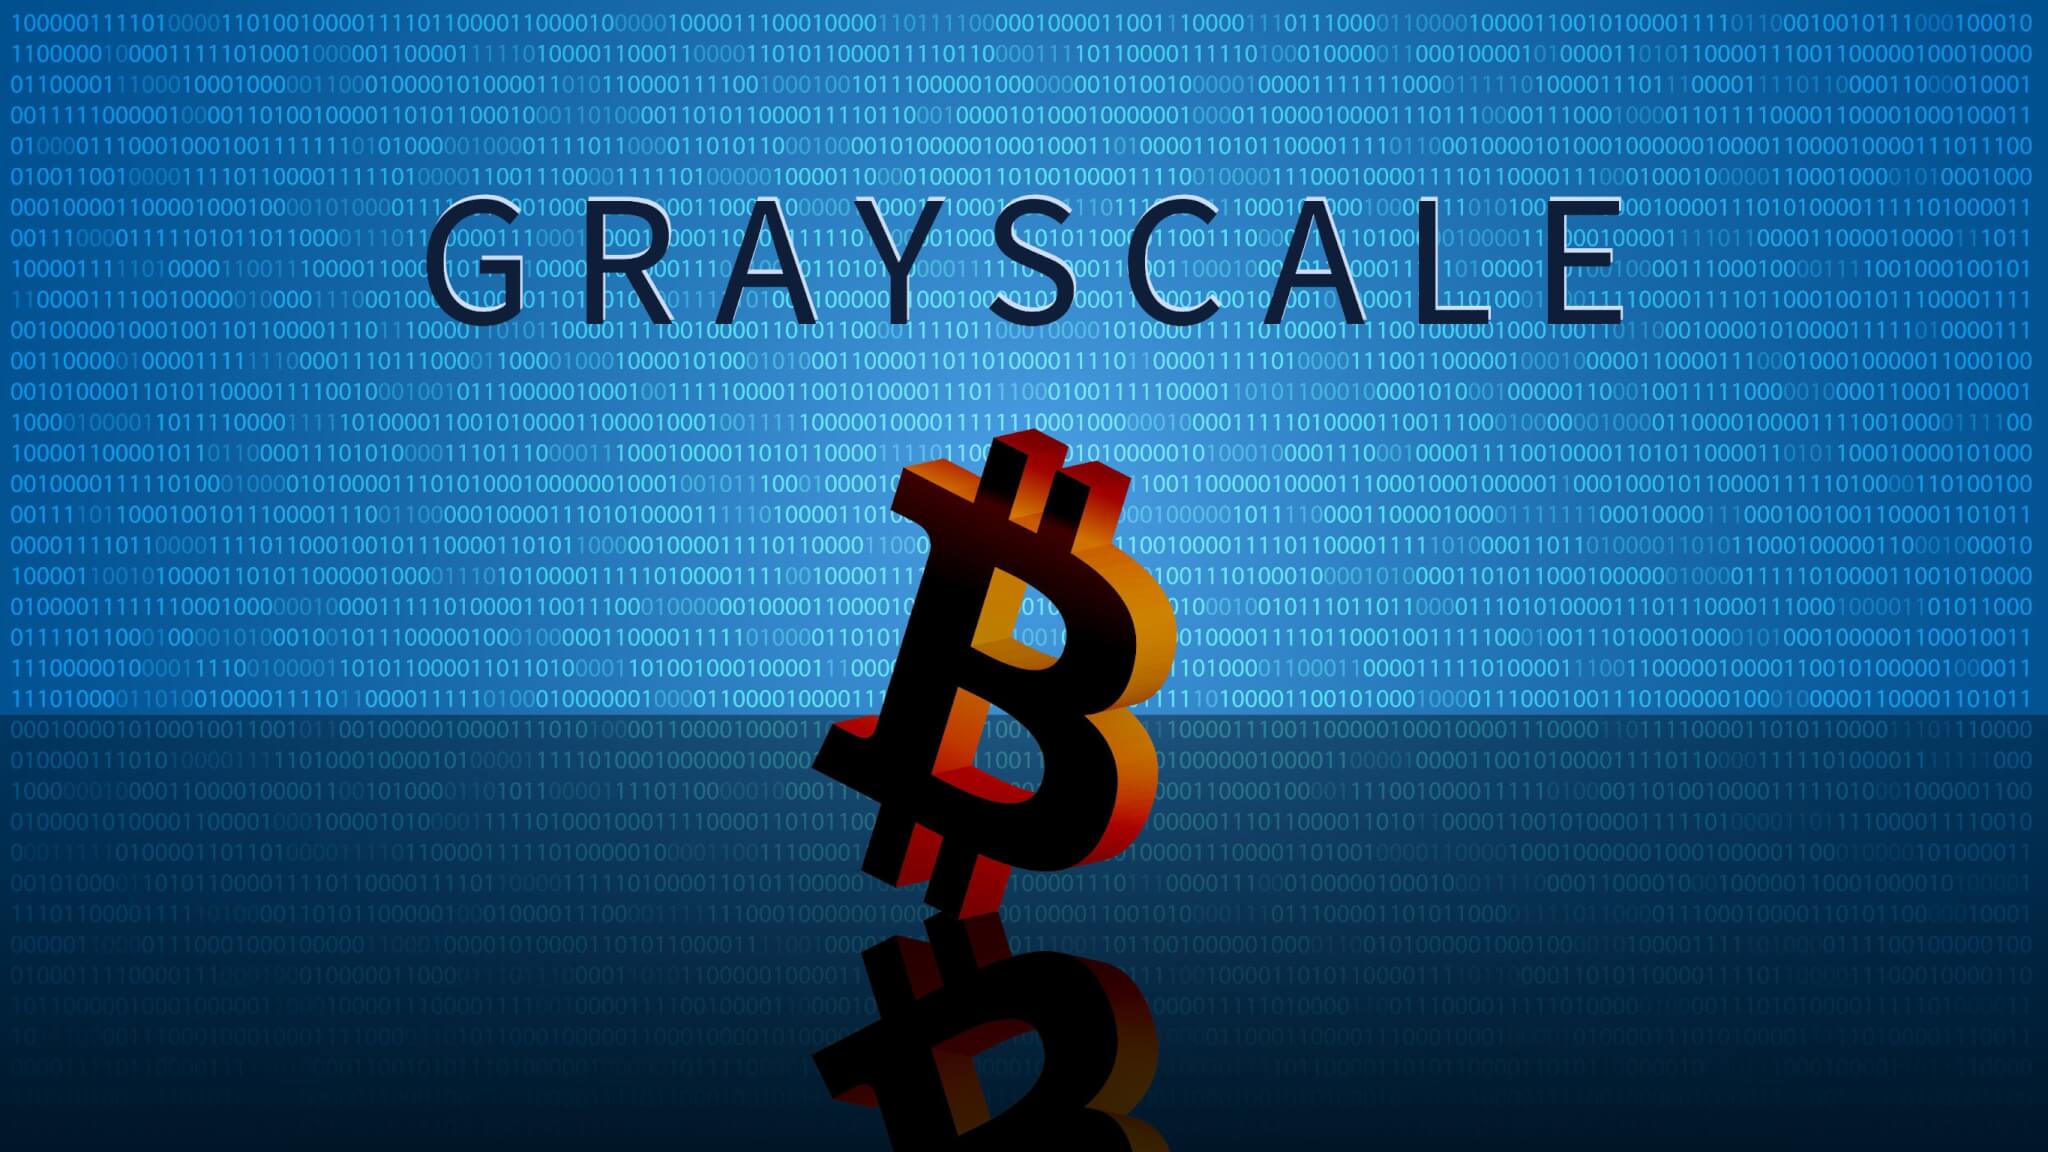 grayscale win against sec in bitcoin etf case